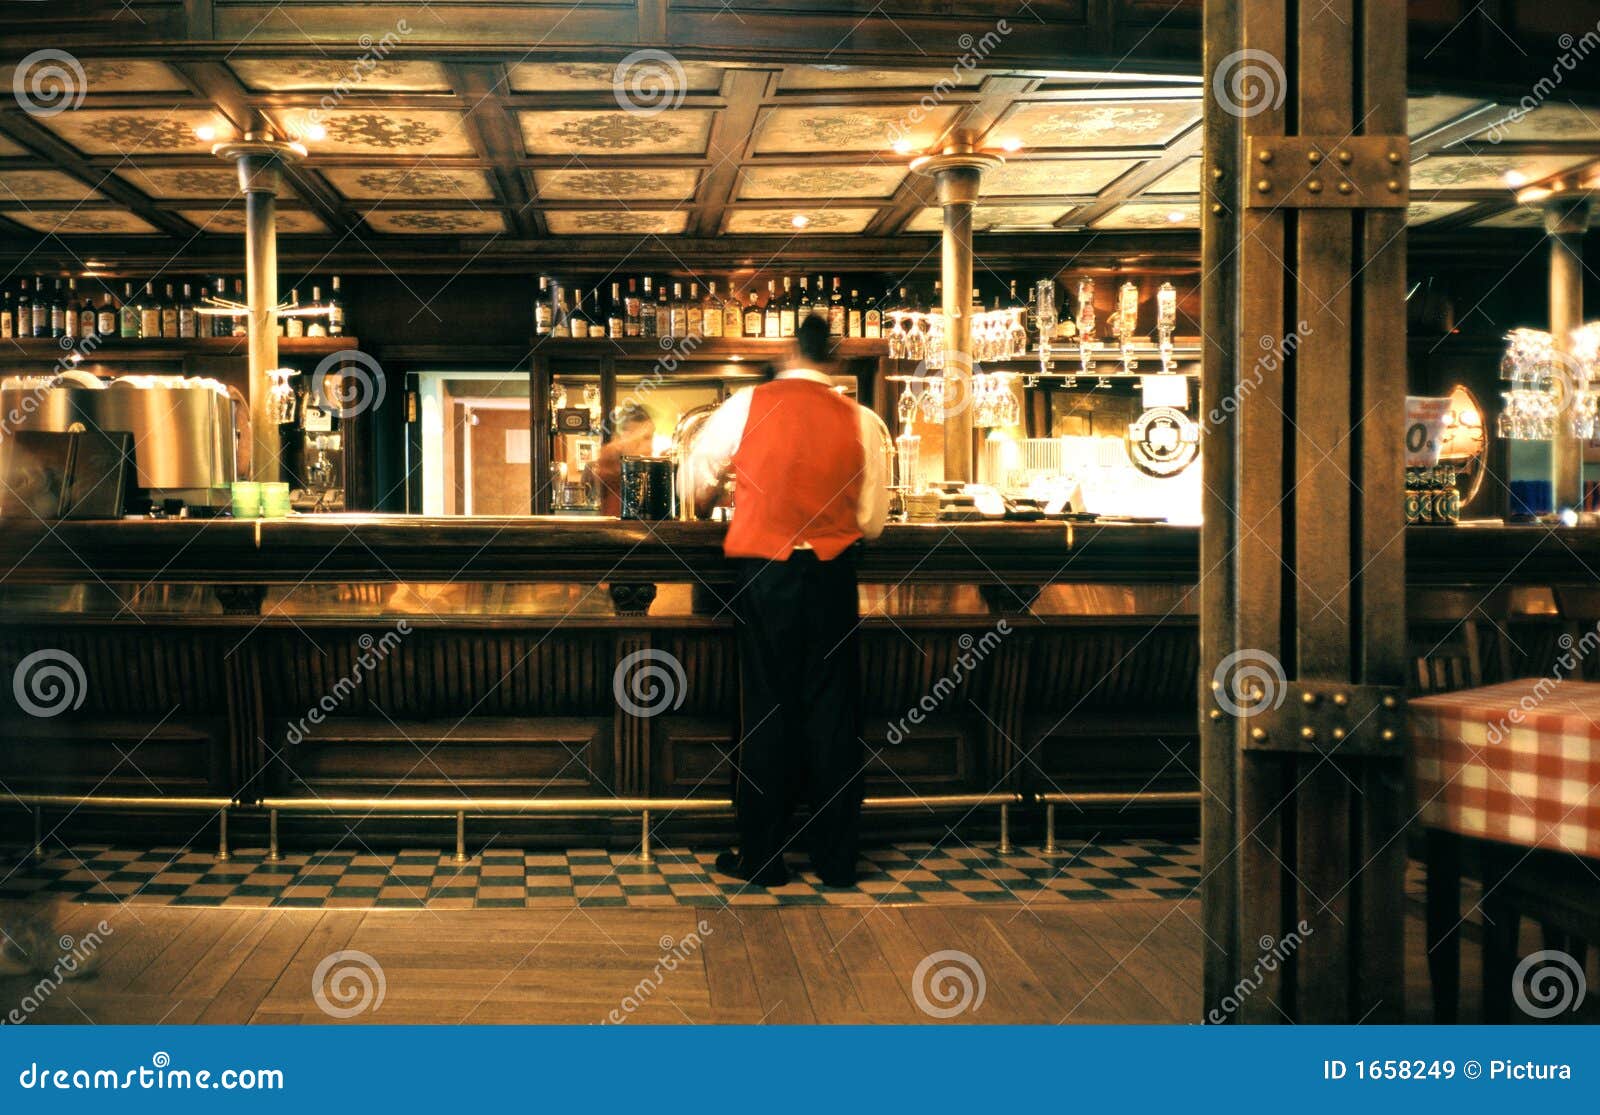 waiter in a pub